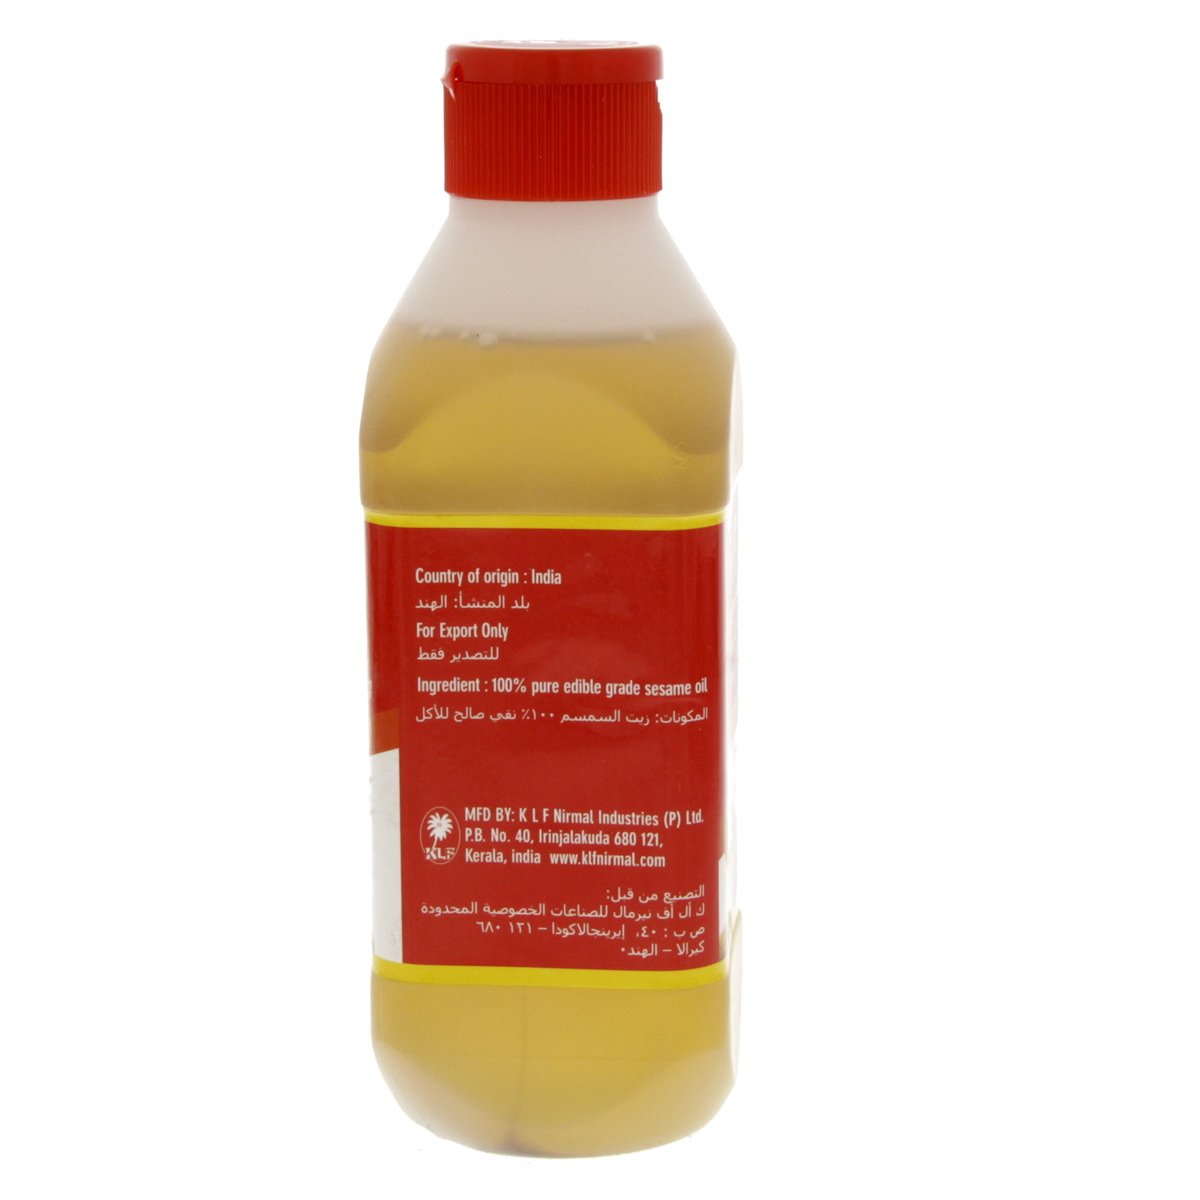 KLF Tilnad Gingelly Oil 200 ml